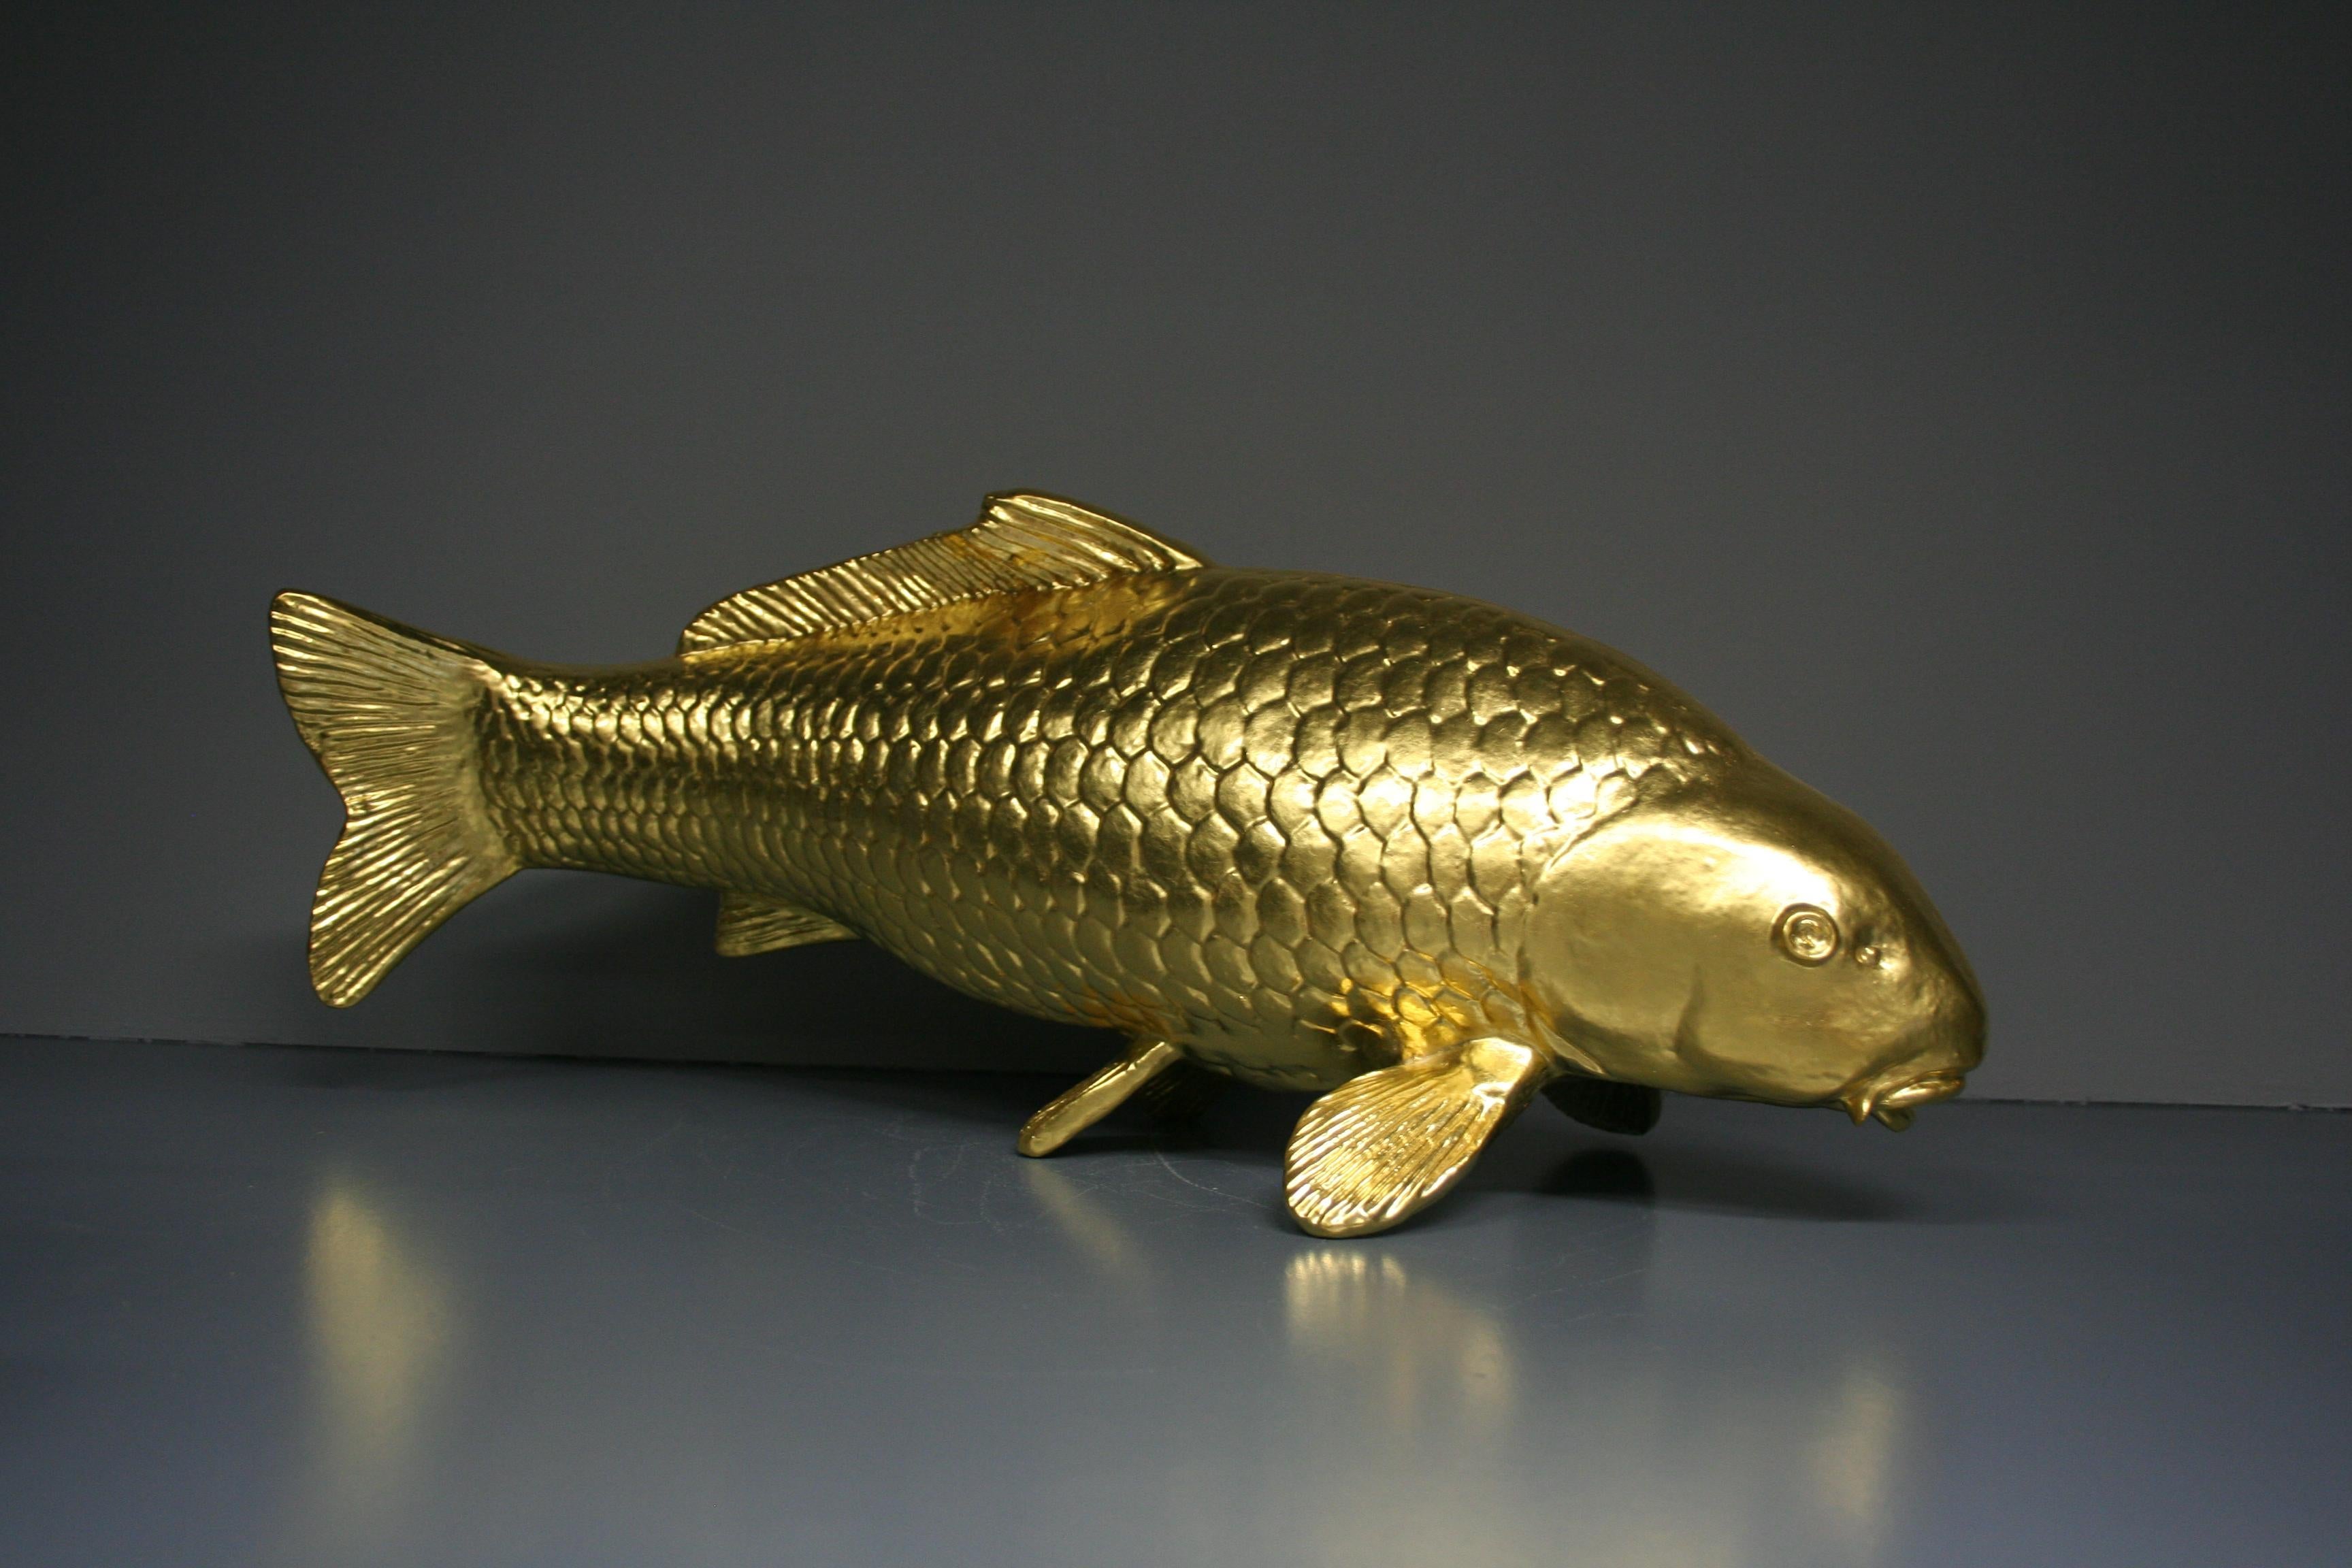 Steven Figurative Sculpture - Golden carp 24 Karat gilded